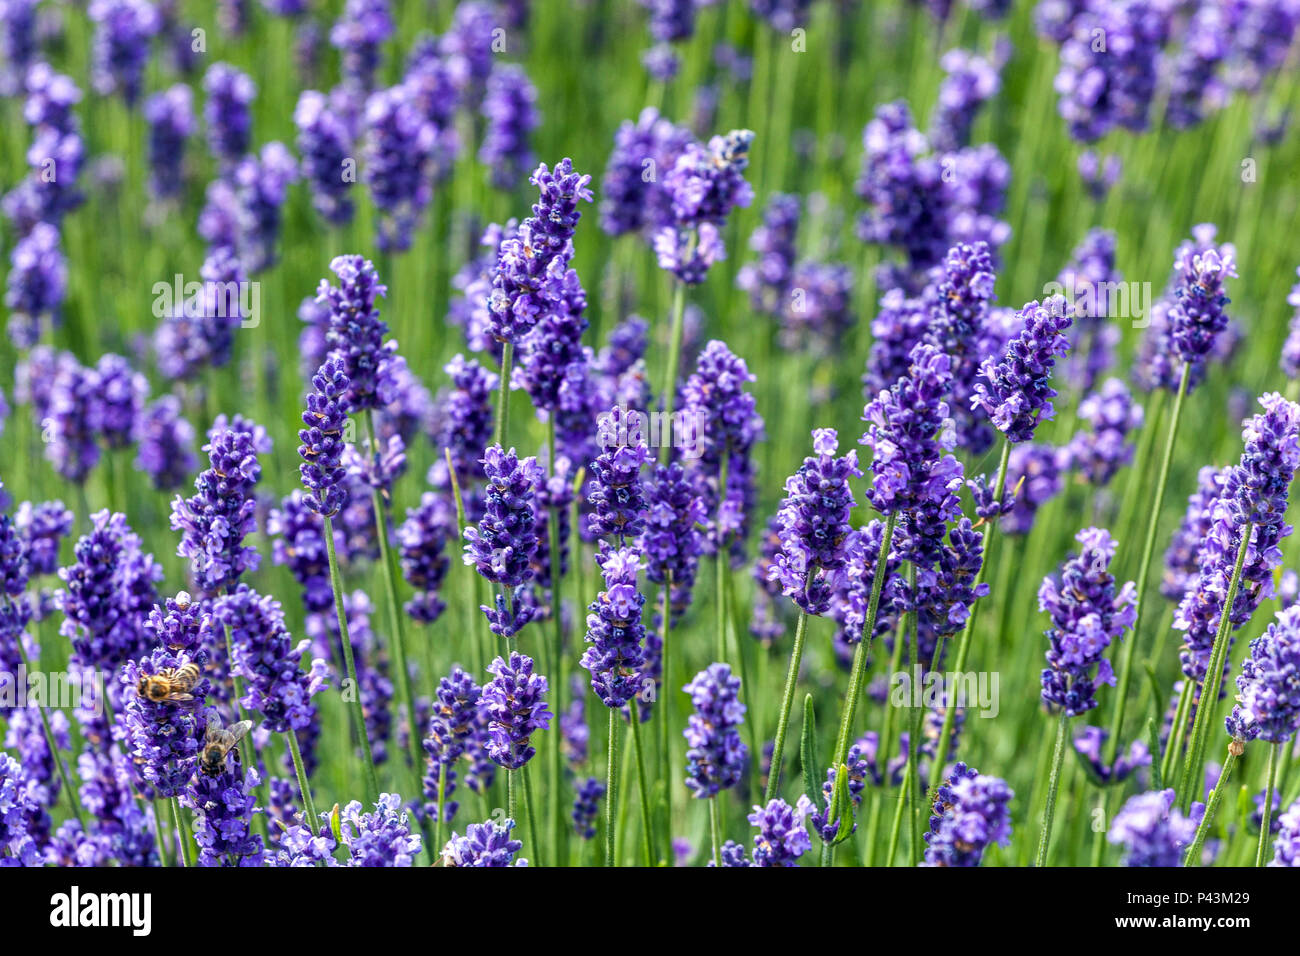 Lavender fragrant flowers spikes Stock Photo